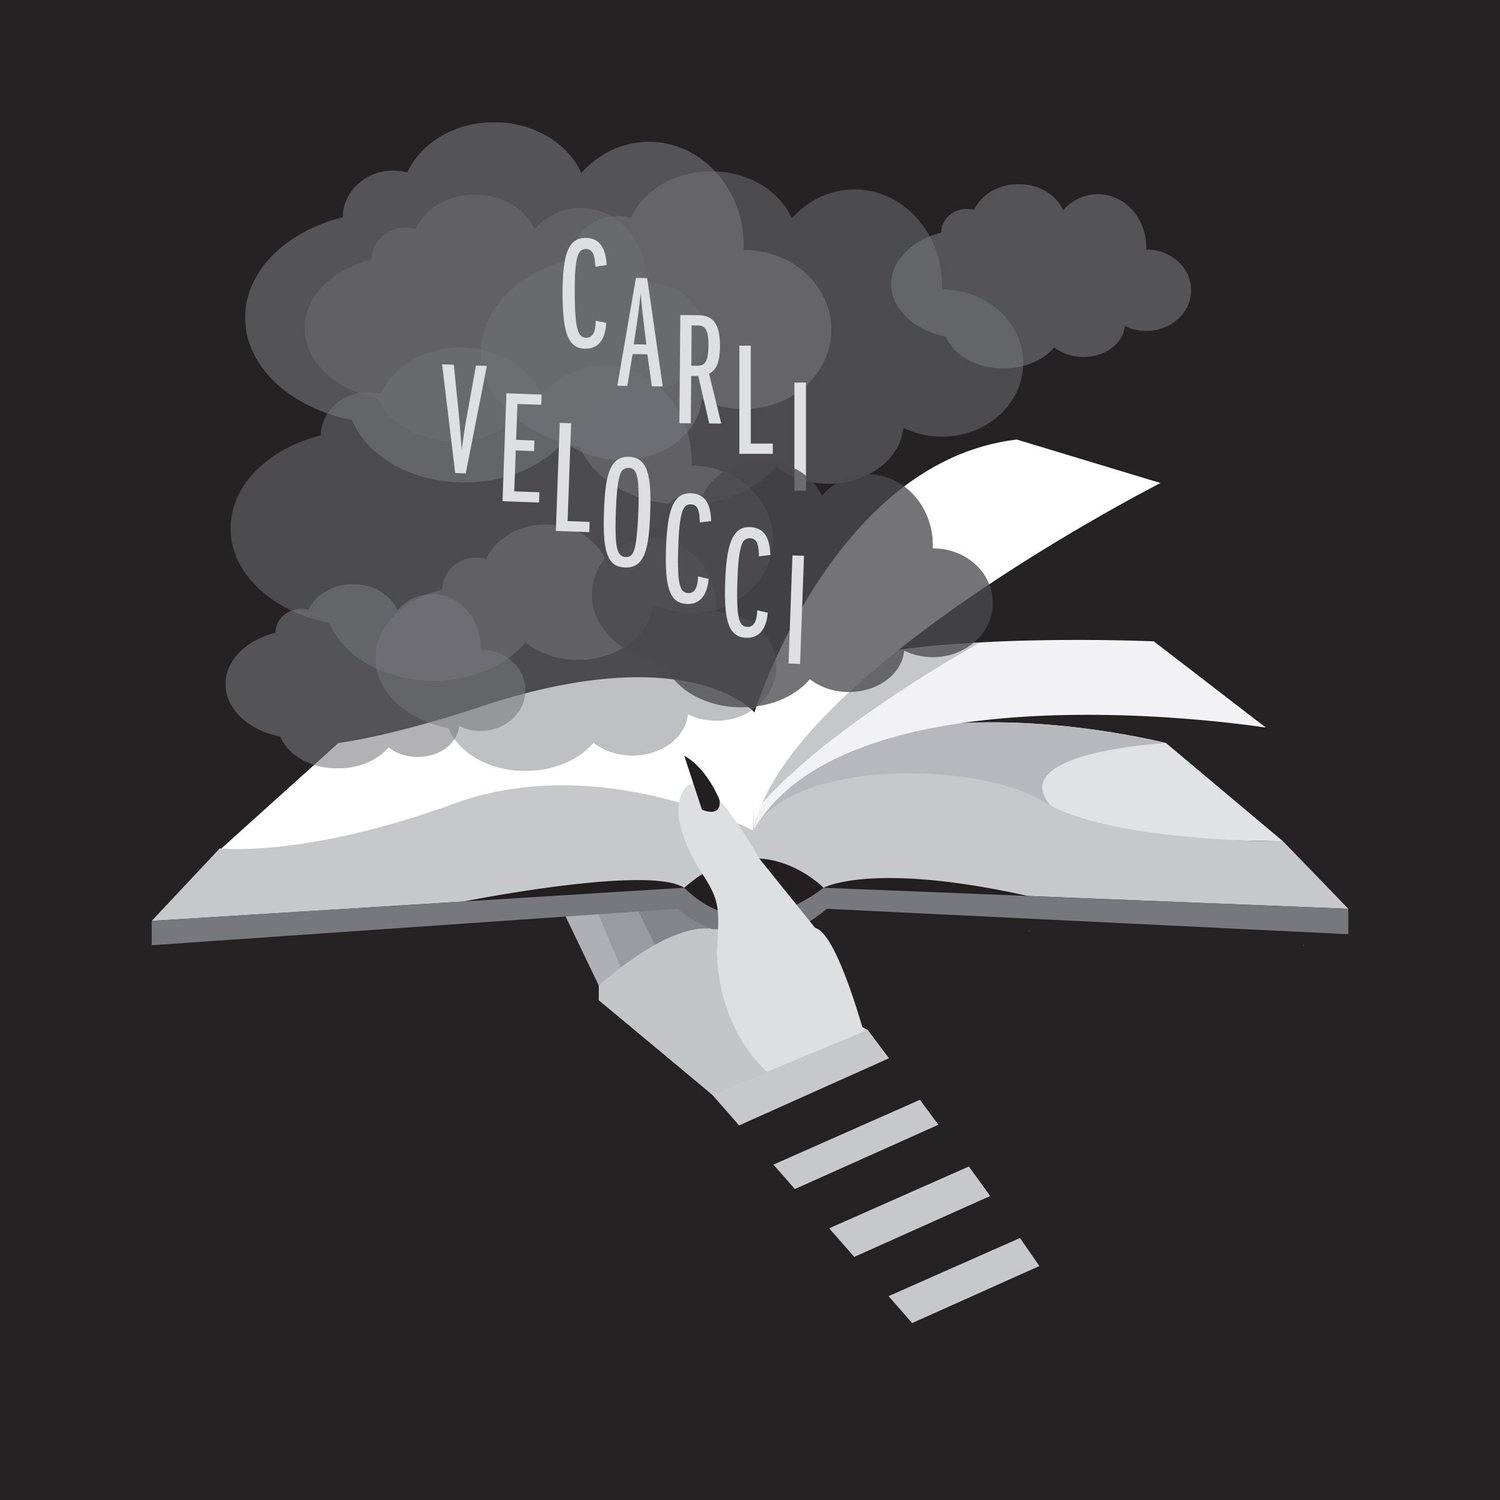 Carli Velocci | Tech | Video Games | Journalist | Editing